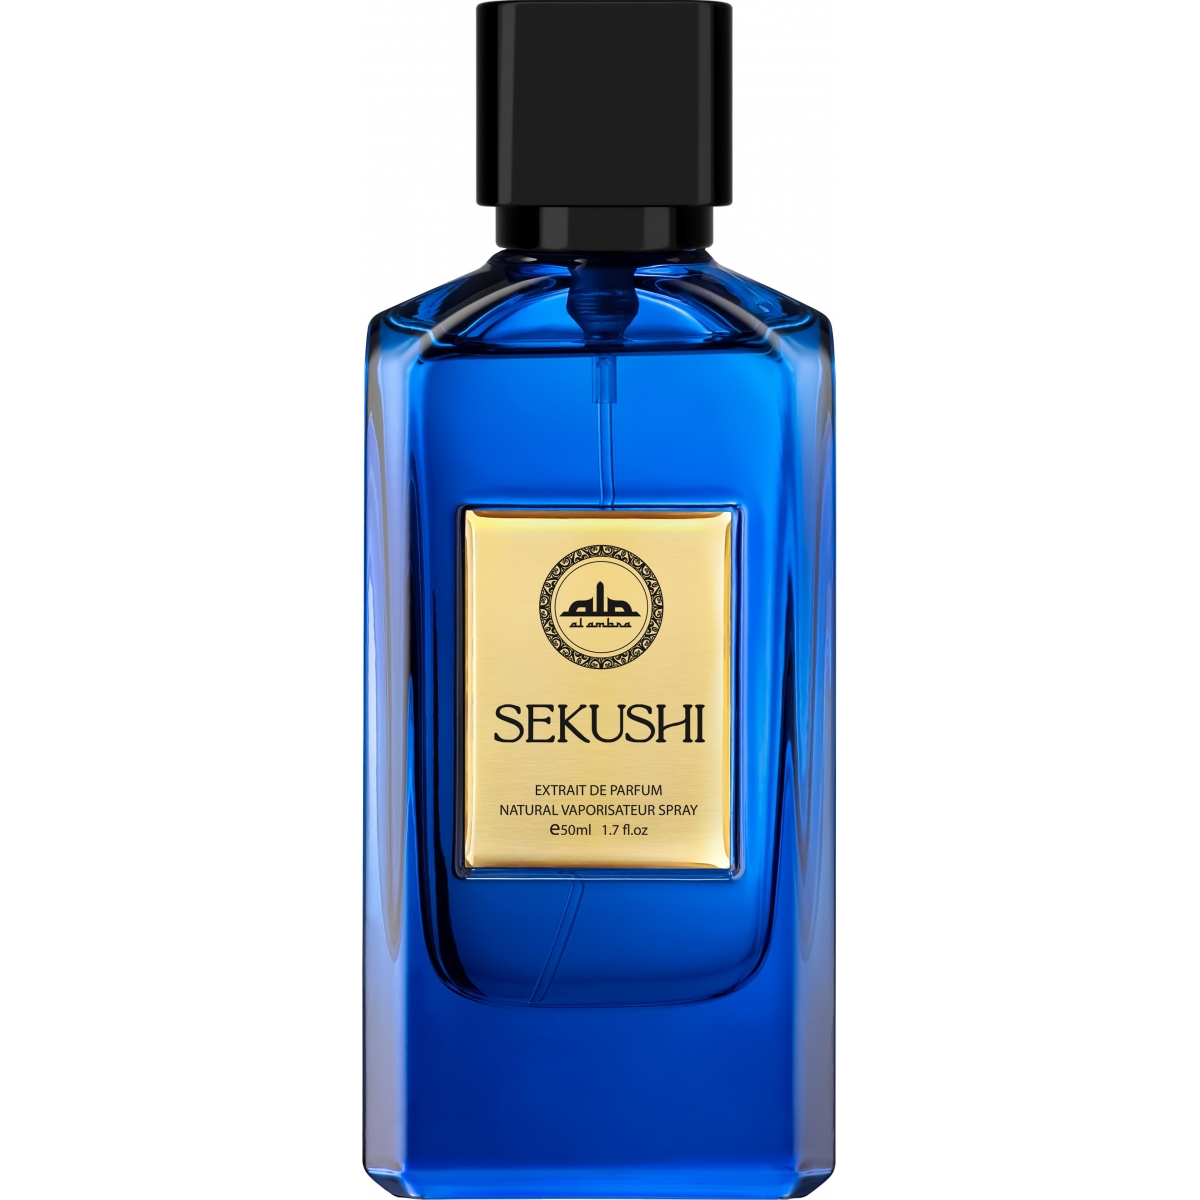 Sekushi Al Ambra Perfumes Perfumes, Profumi Unisex, Arada Perfumes